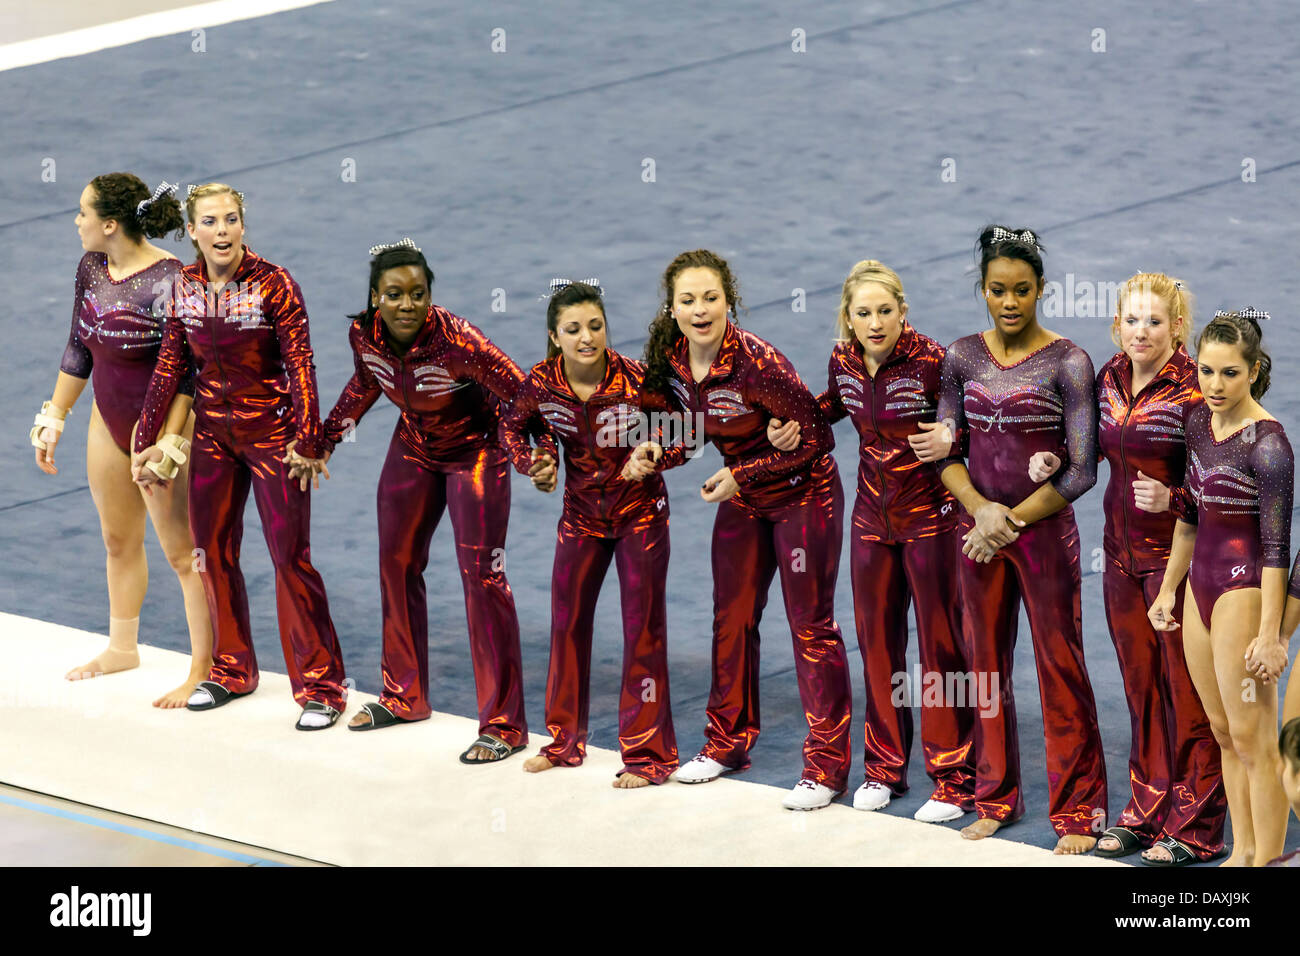 Alabama Crimson Tide women's gymnastics team cheer on fellow vaulting competitor during meet with University of Florida (2-8-13) Stock Photo